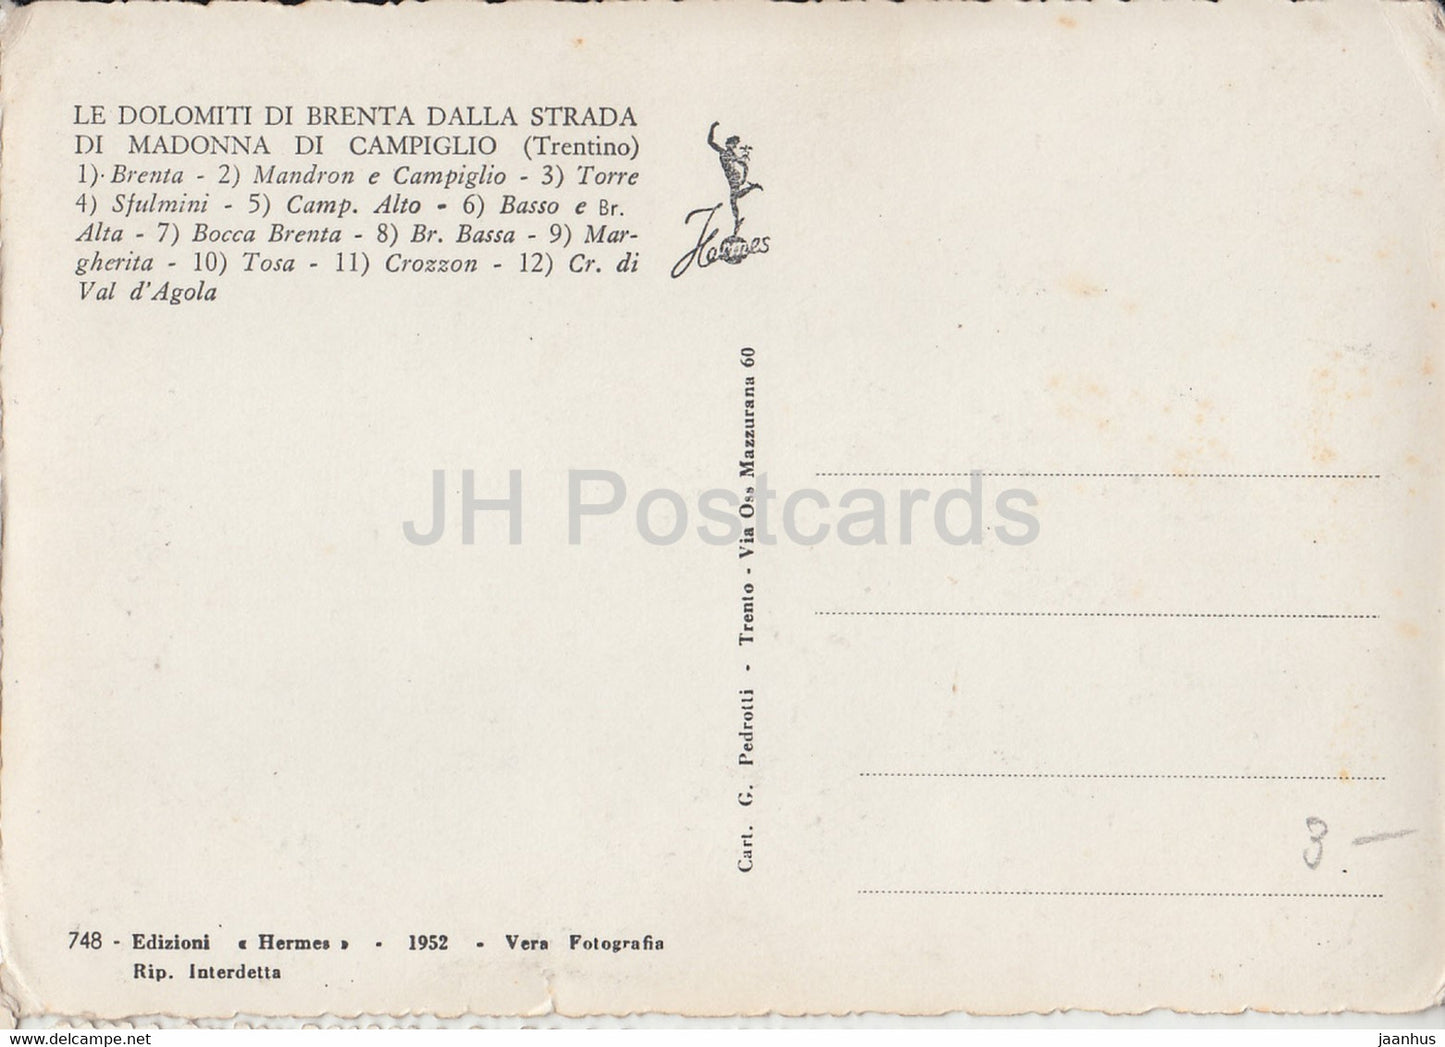 Le Dolomiti di Brenta dalla Strada di Madonna di Campiglio - carte postale ancienne - 1952 - Italie - inutilisé